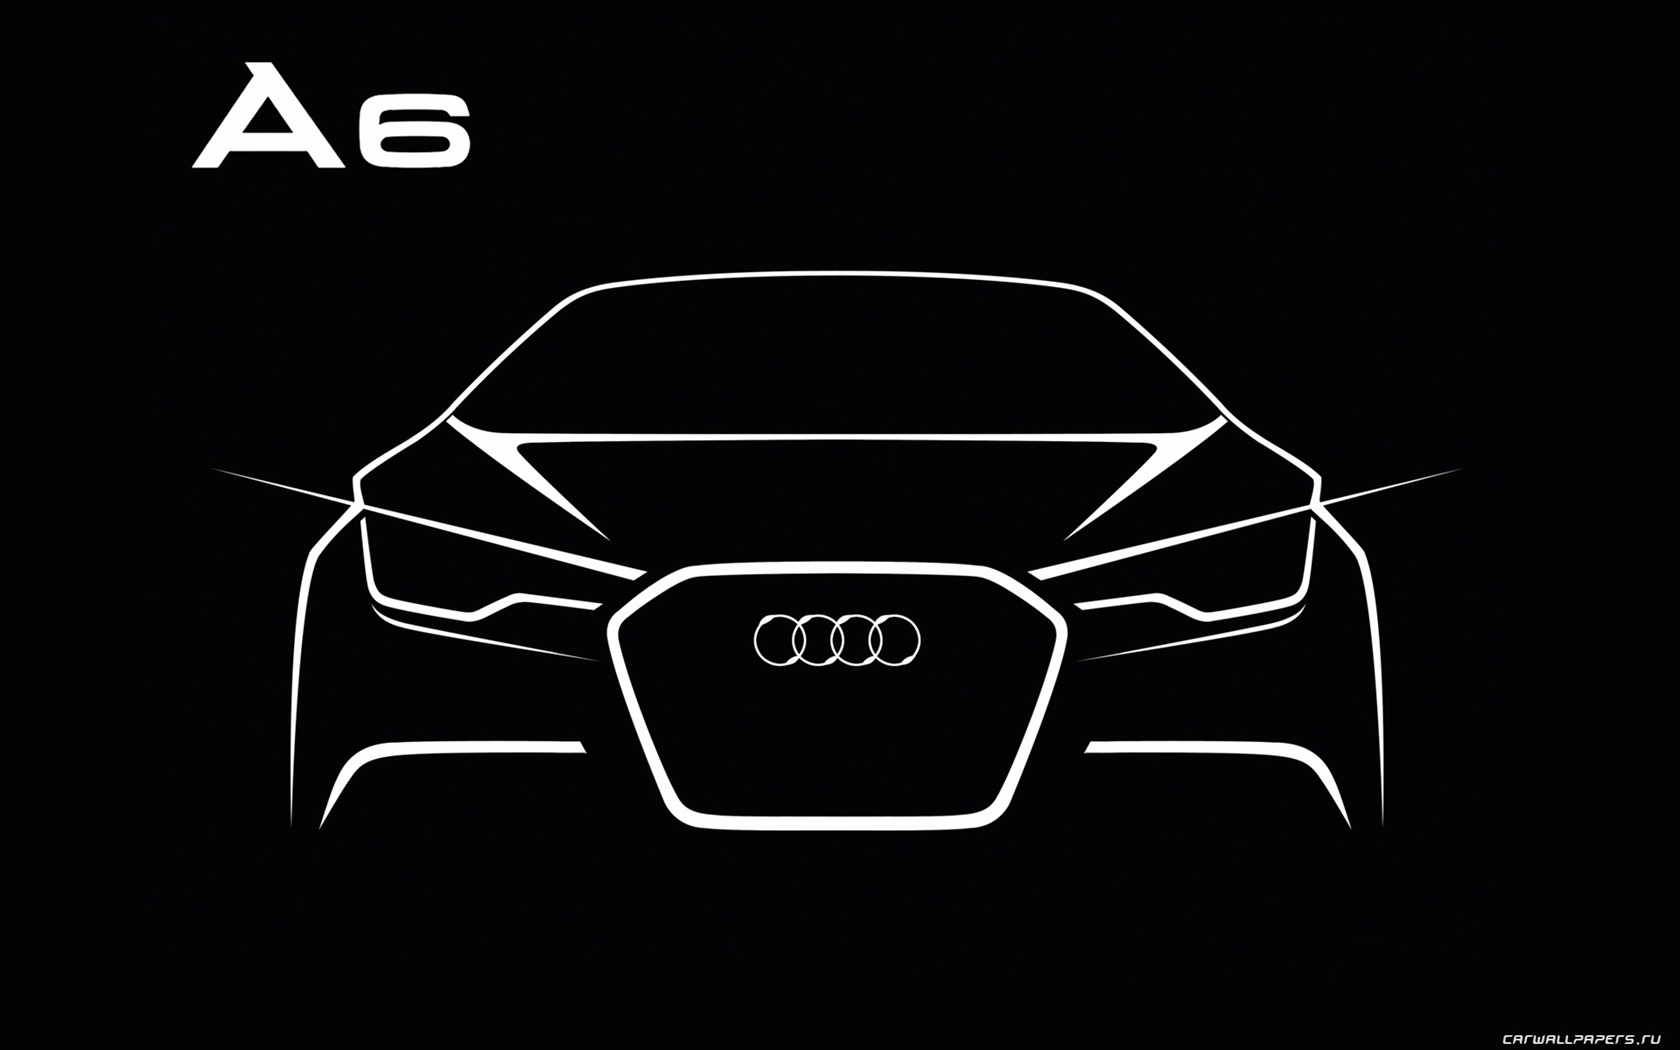 Audi A6 3.0 TDI quattro - 2011 奧迪 #28 - 1680x1050